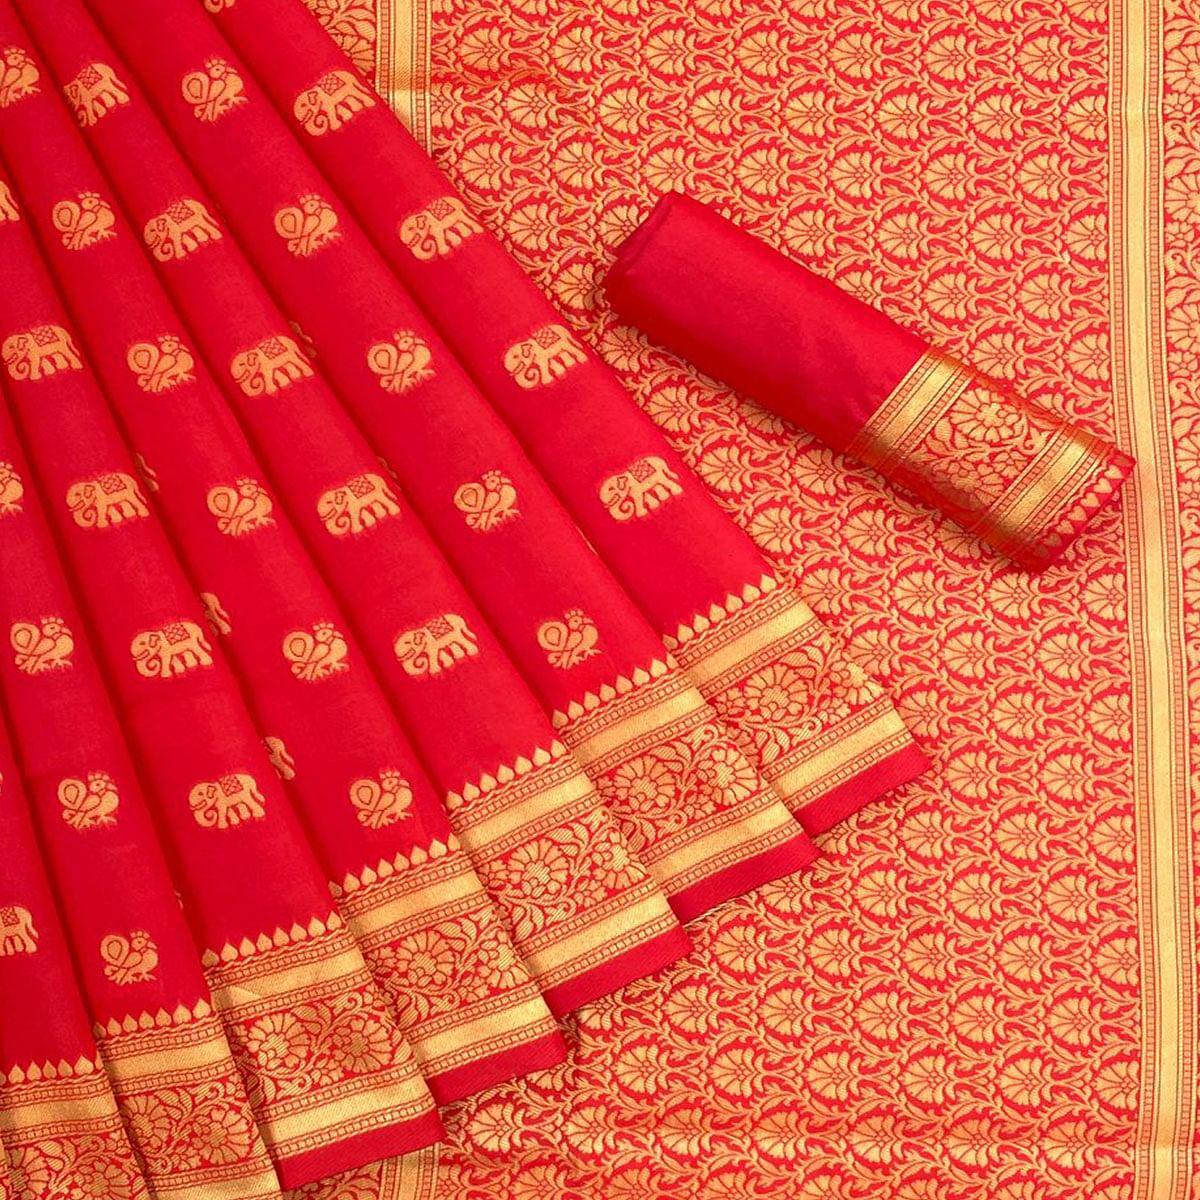 Red Festive Wear Woven Art Silk Saree - Peachmode